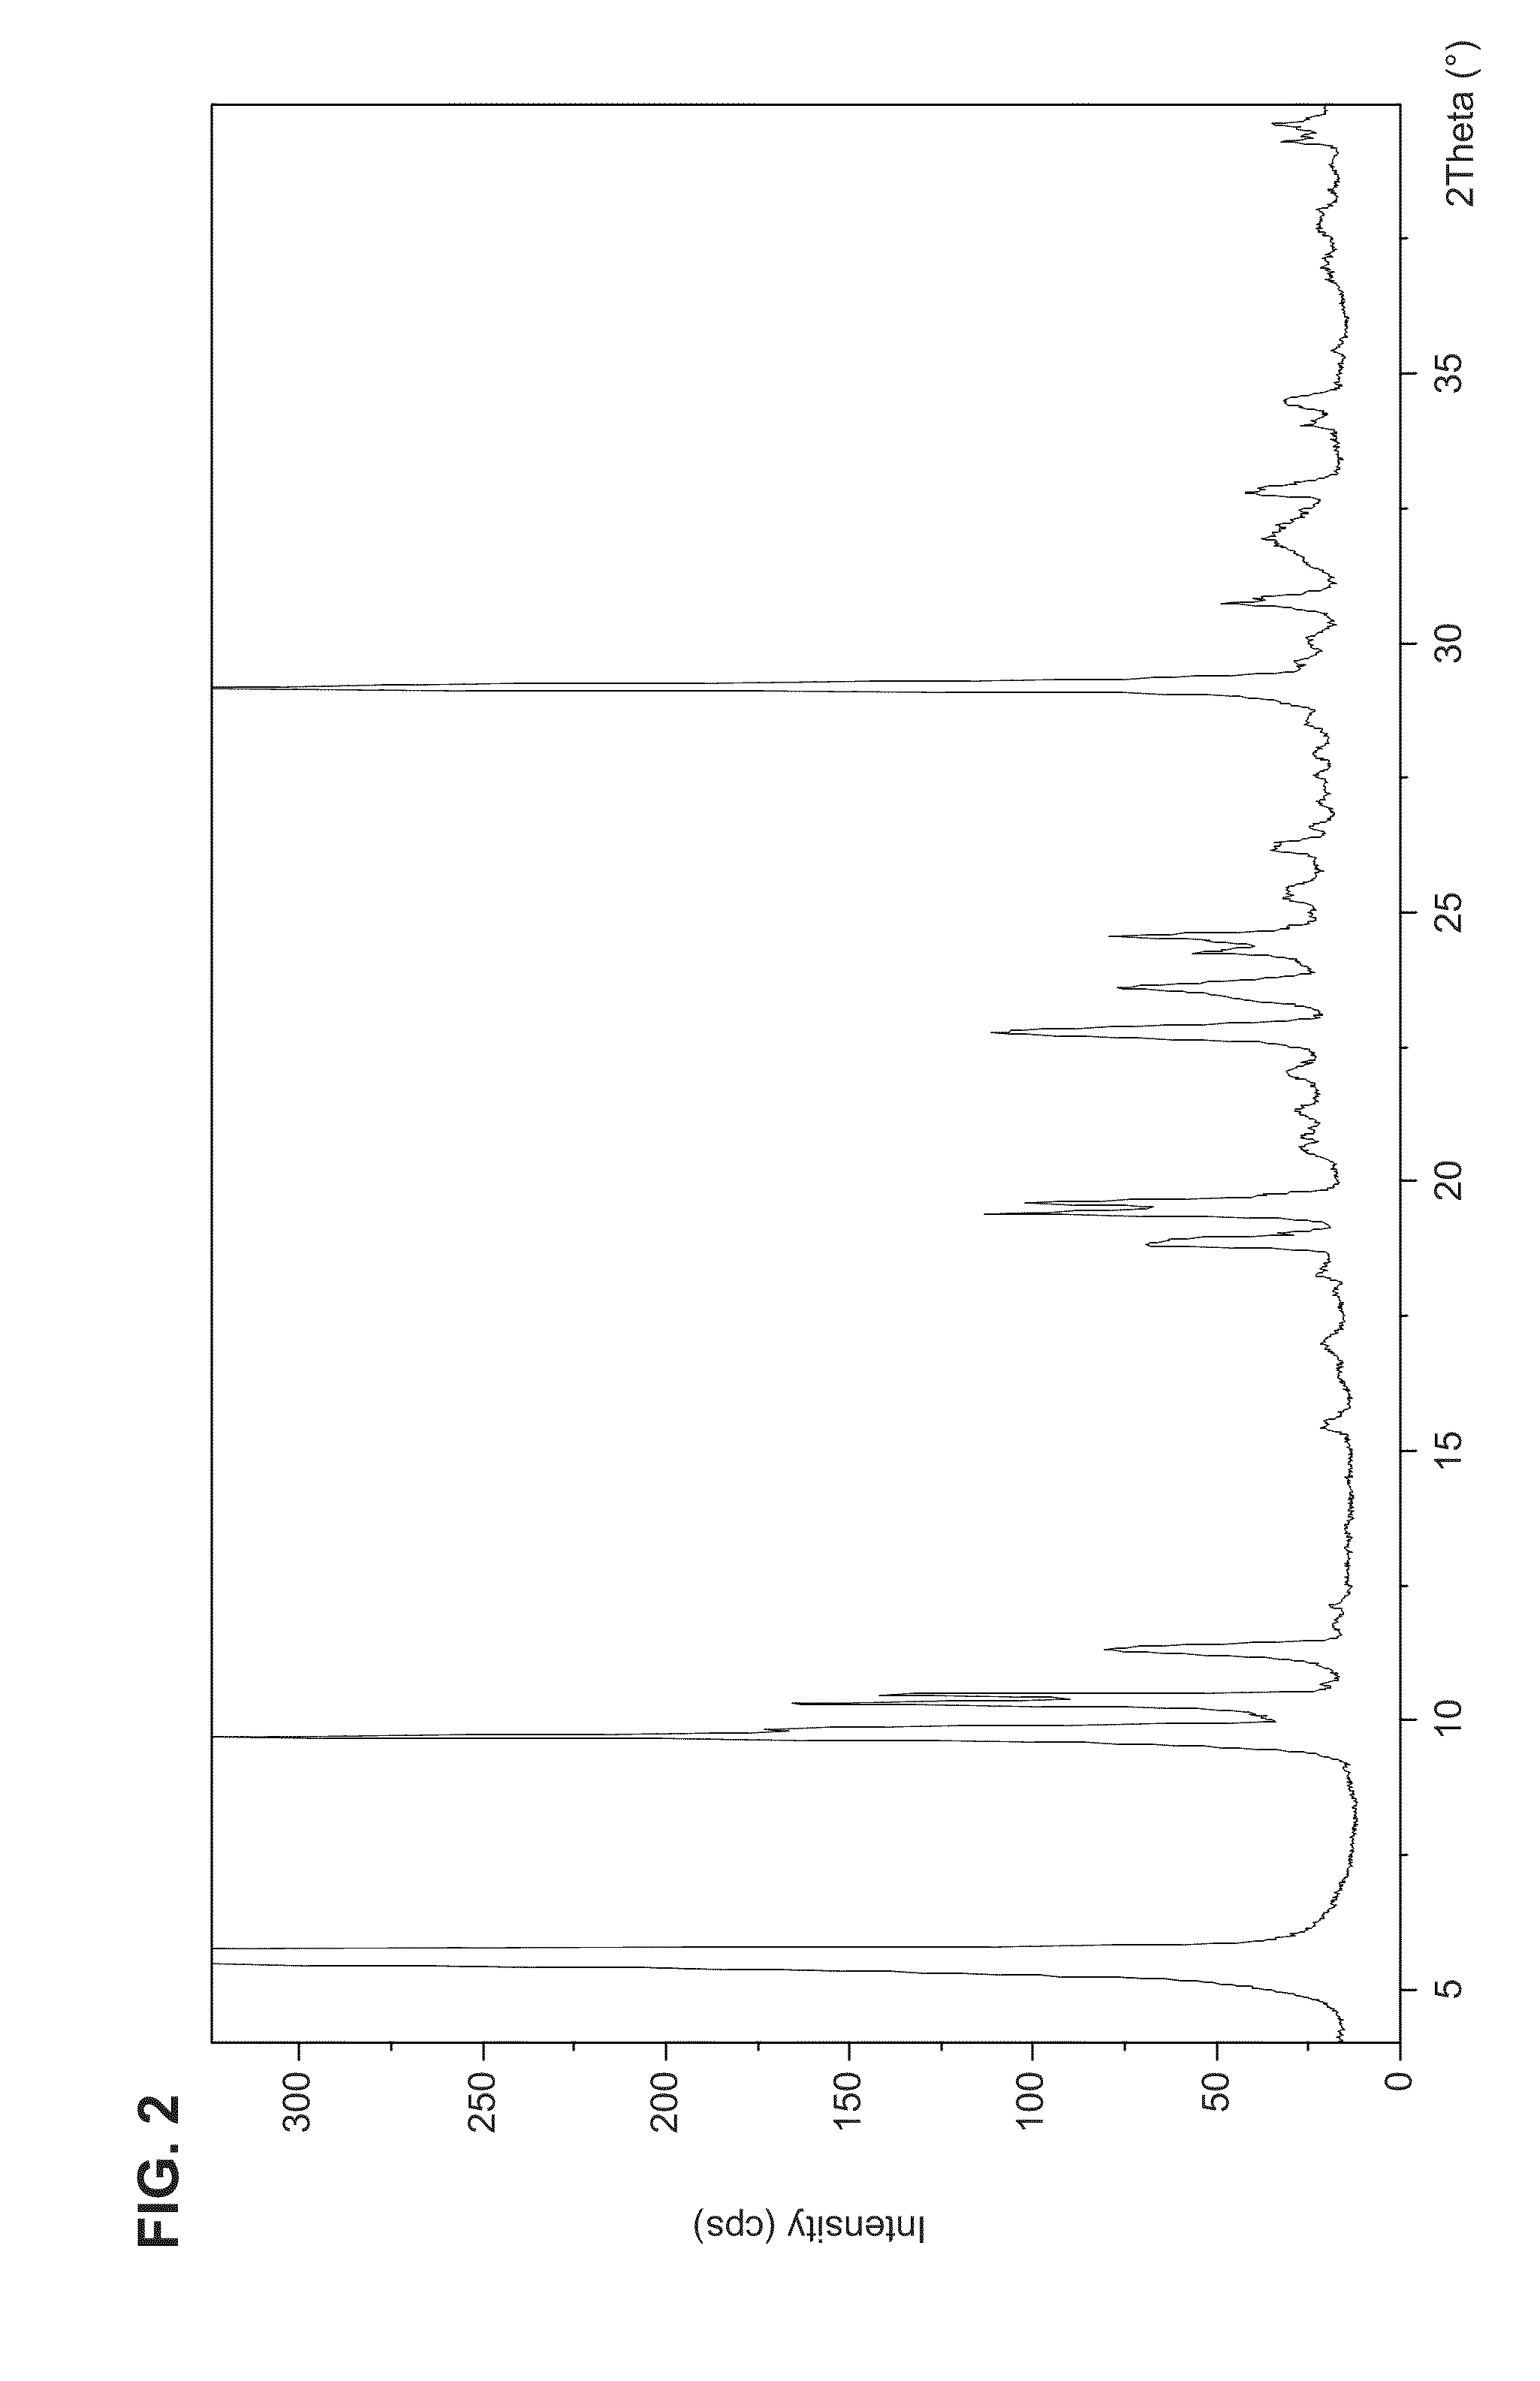 Crystalline forms of erlotinib base and erlotinib hcl